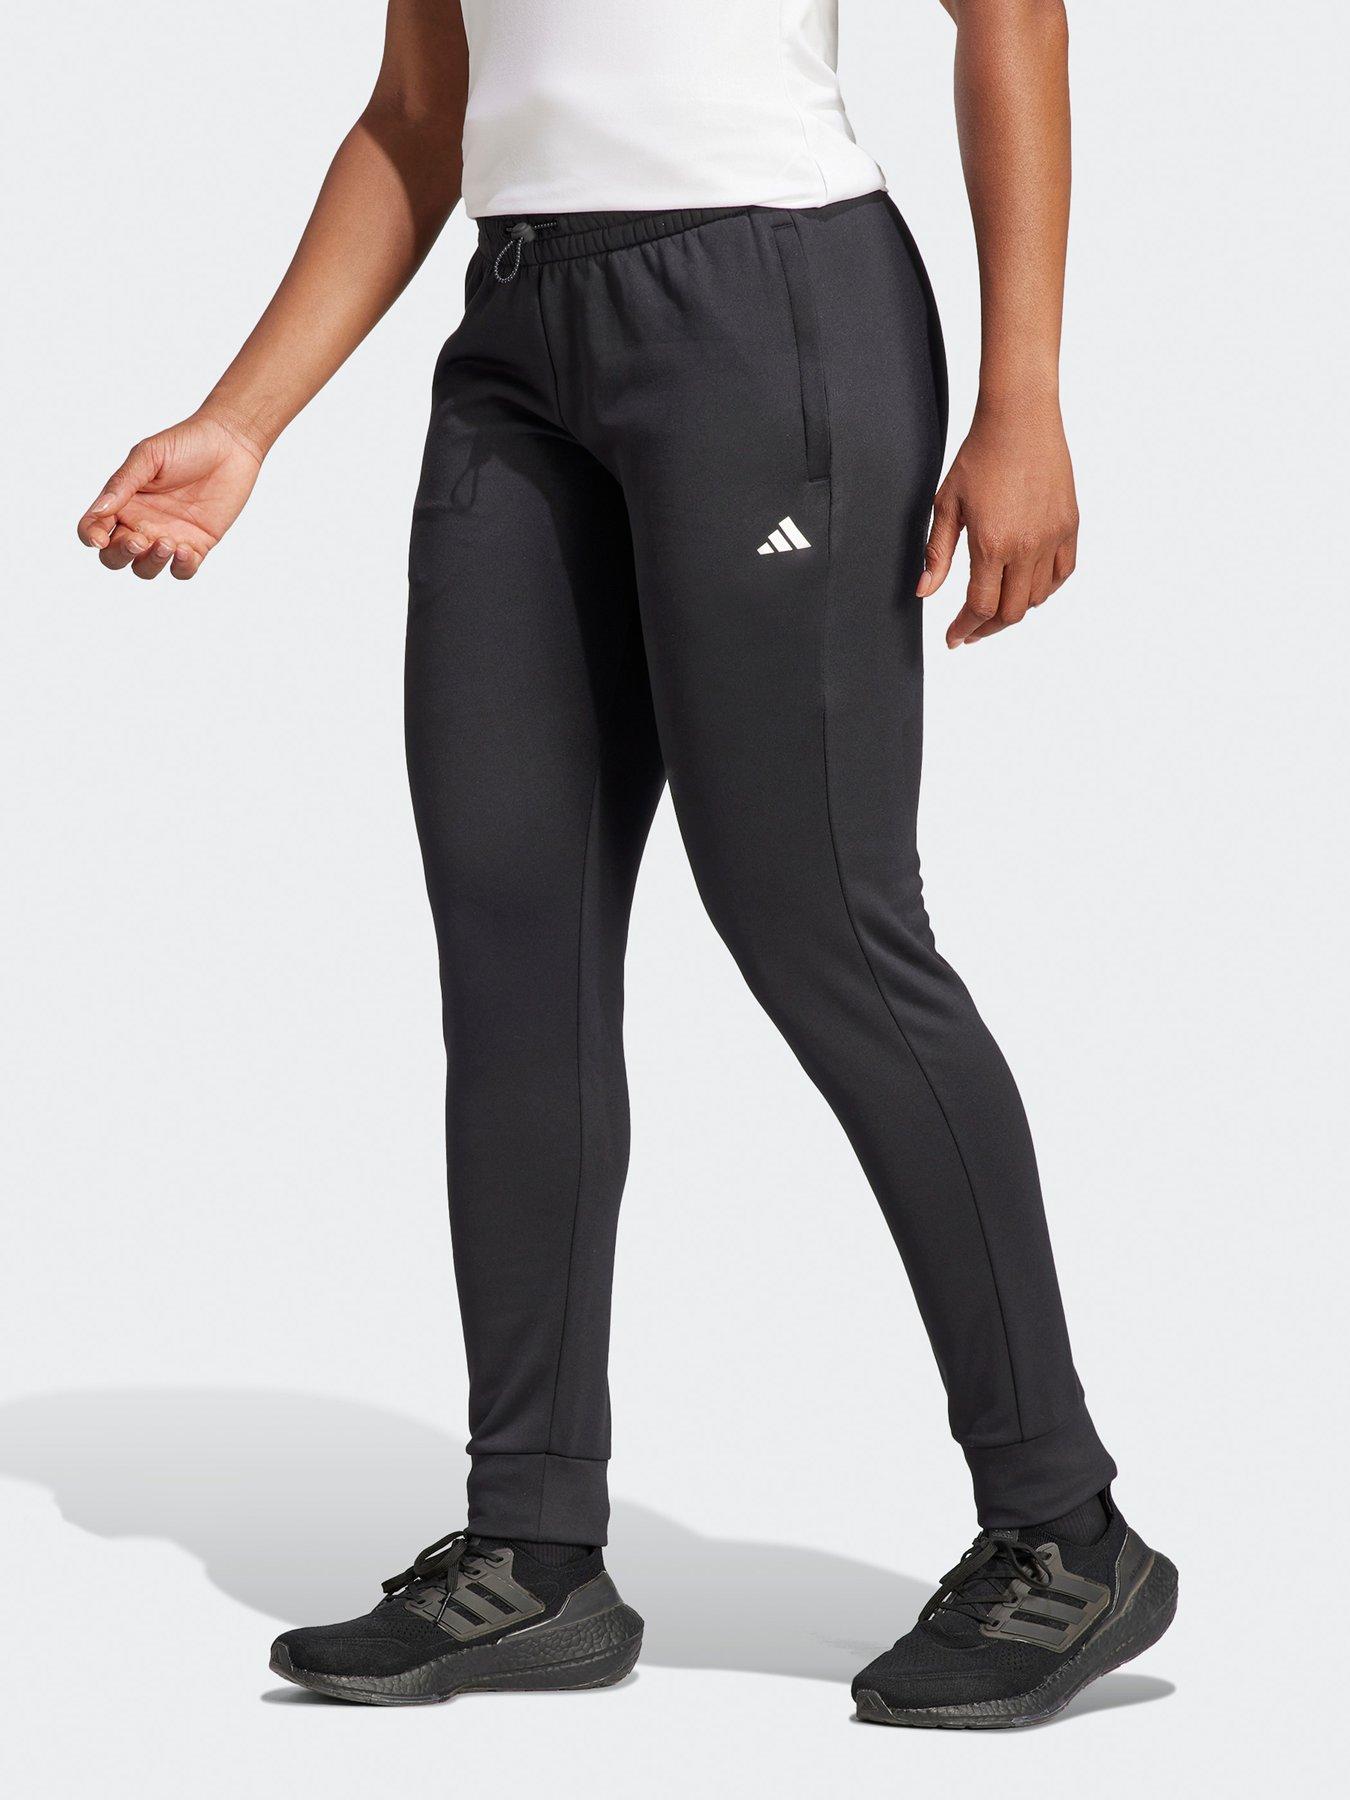 Adidas Womens Ultimate Fleece Tights - Climawarm Running Leggings  (Black/Black, Large) 